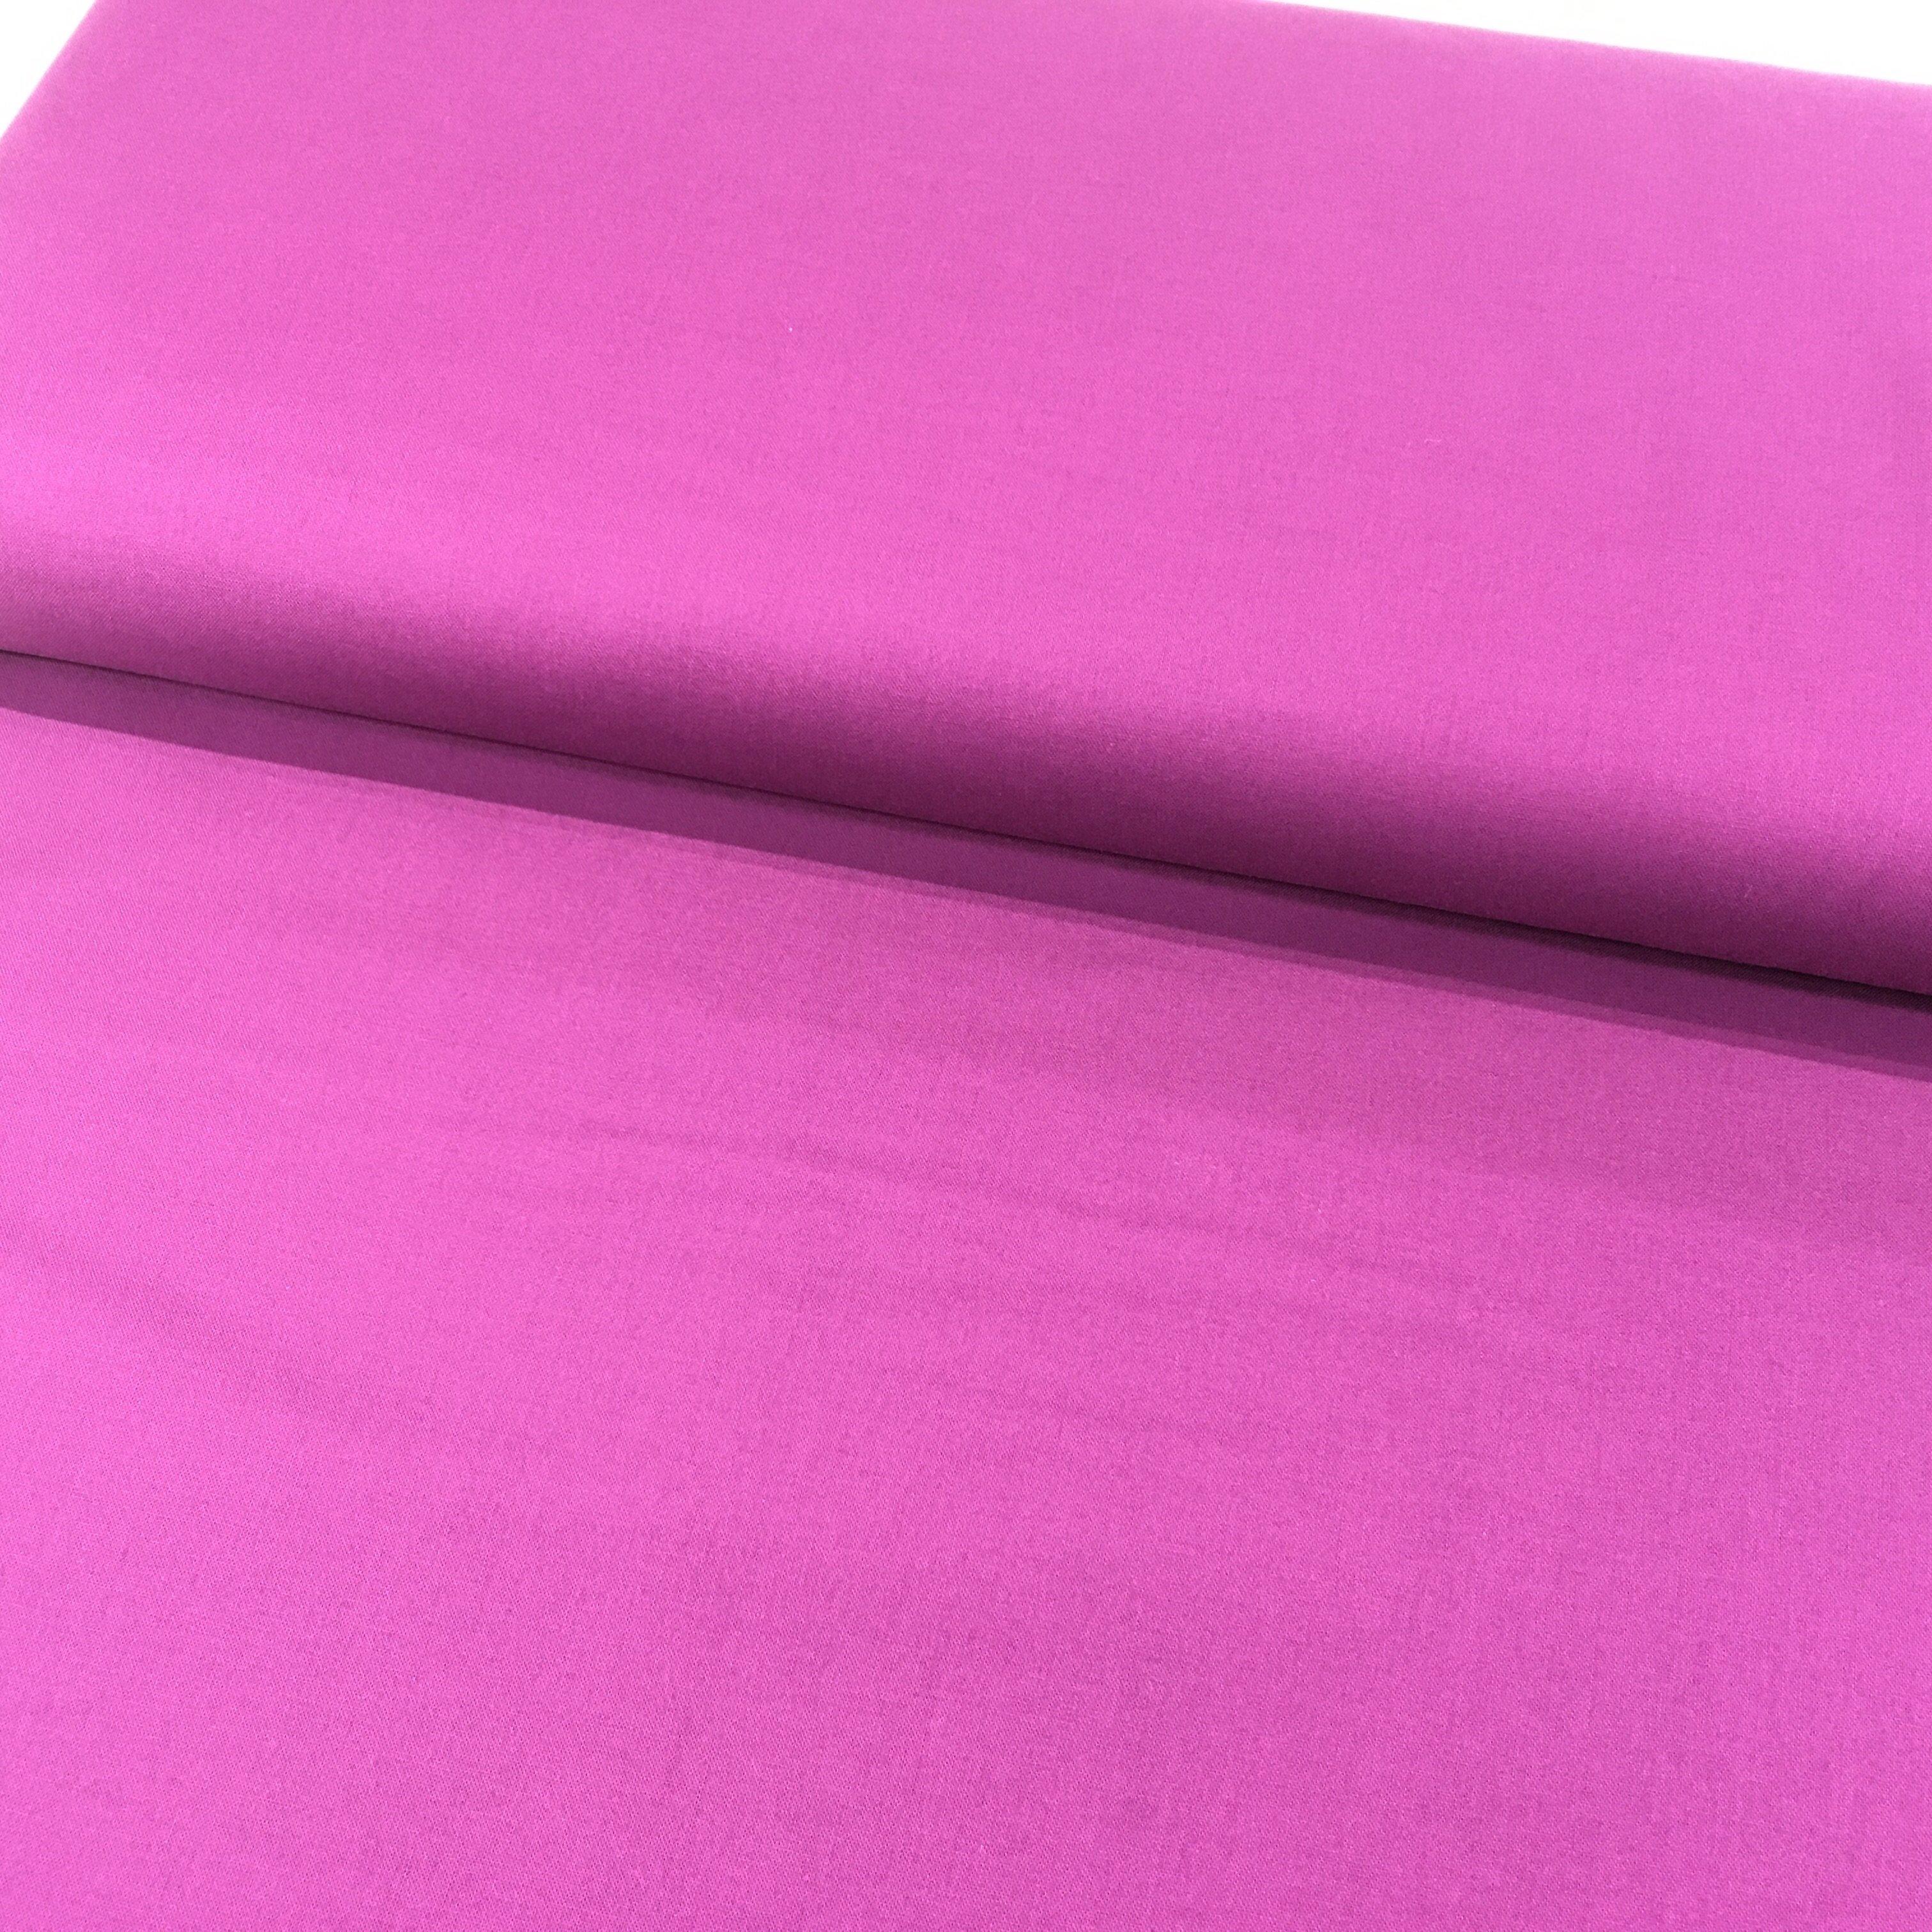 Kona Cotton Solid - Bright Pink – Emma's Fabric Studio